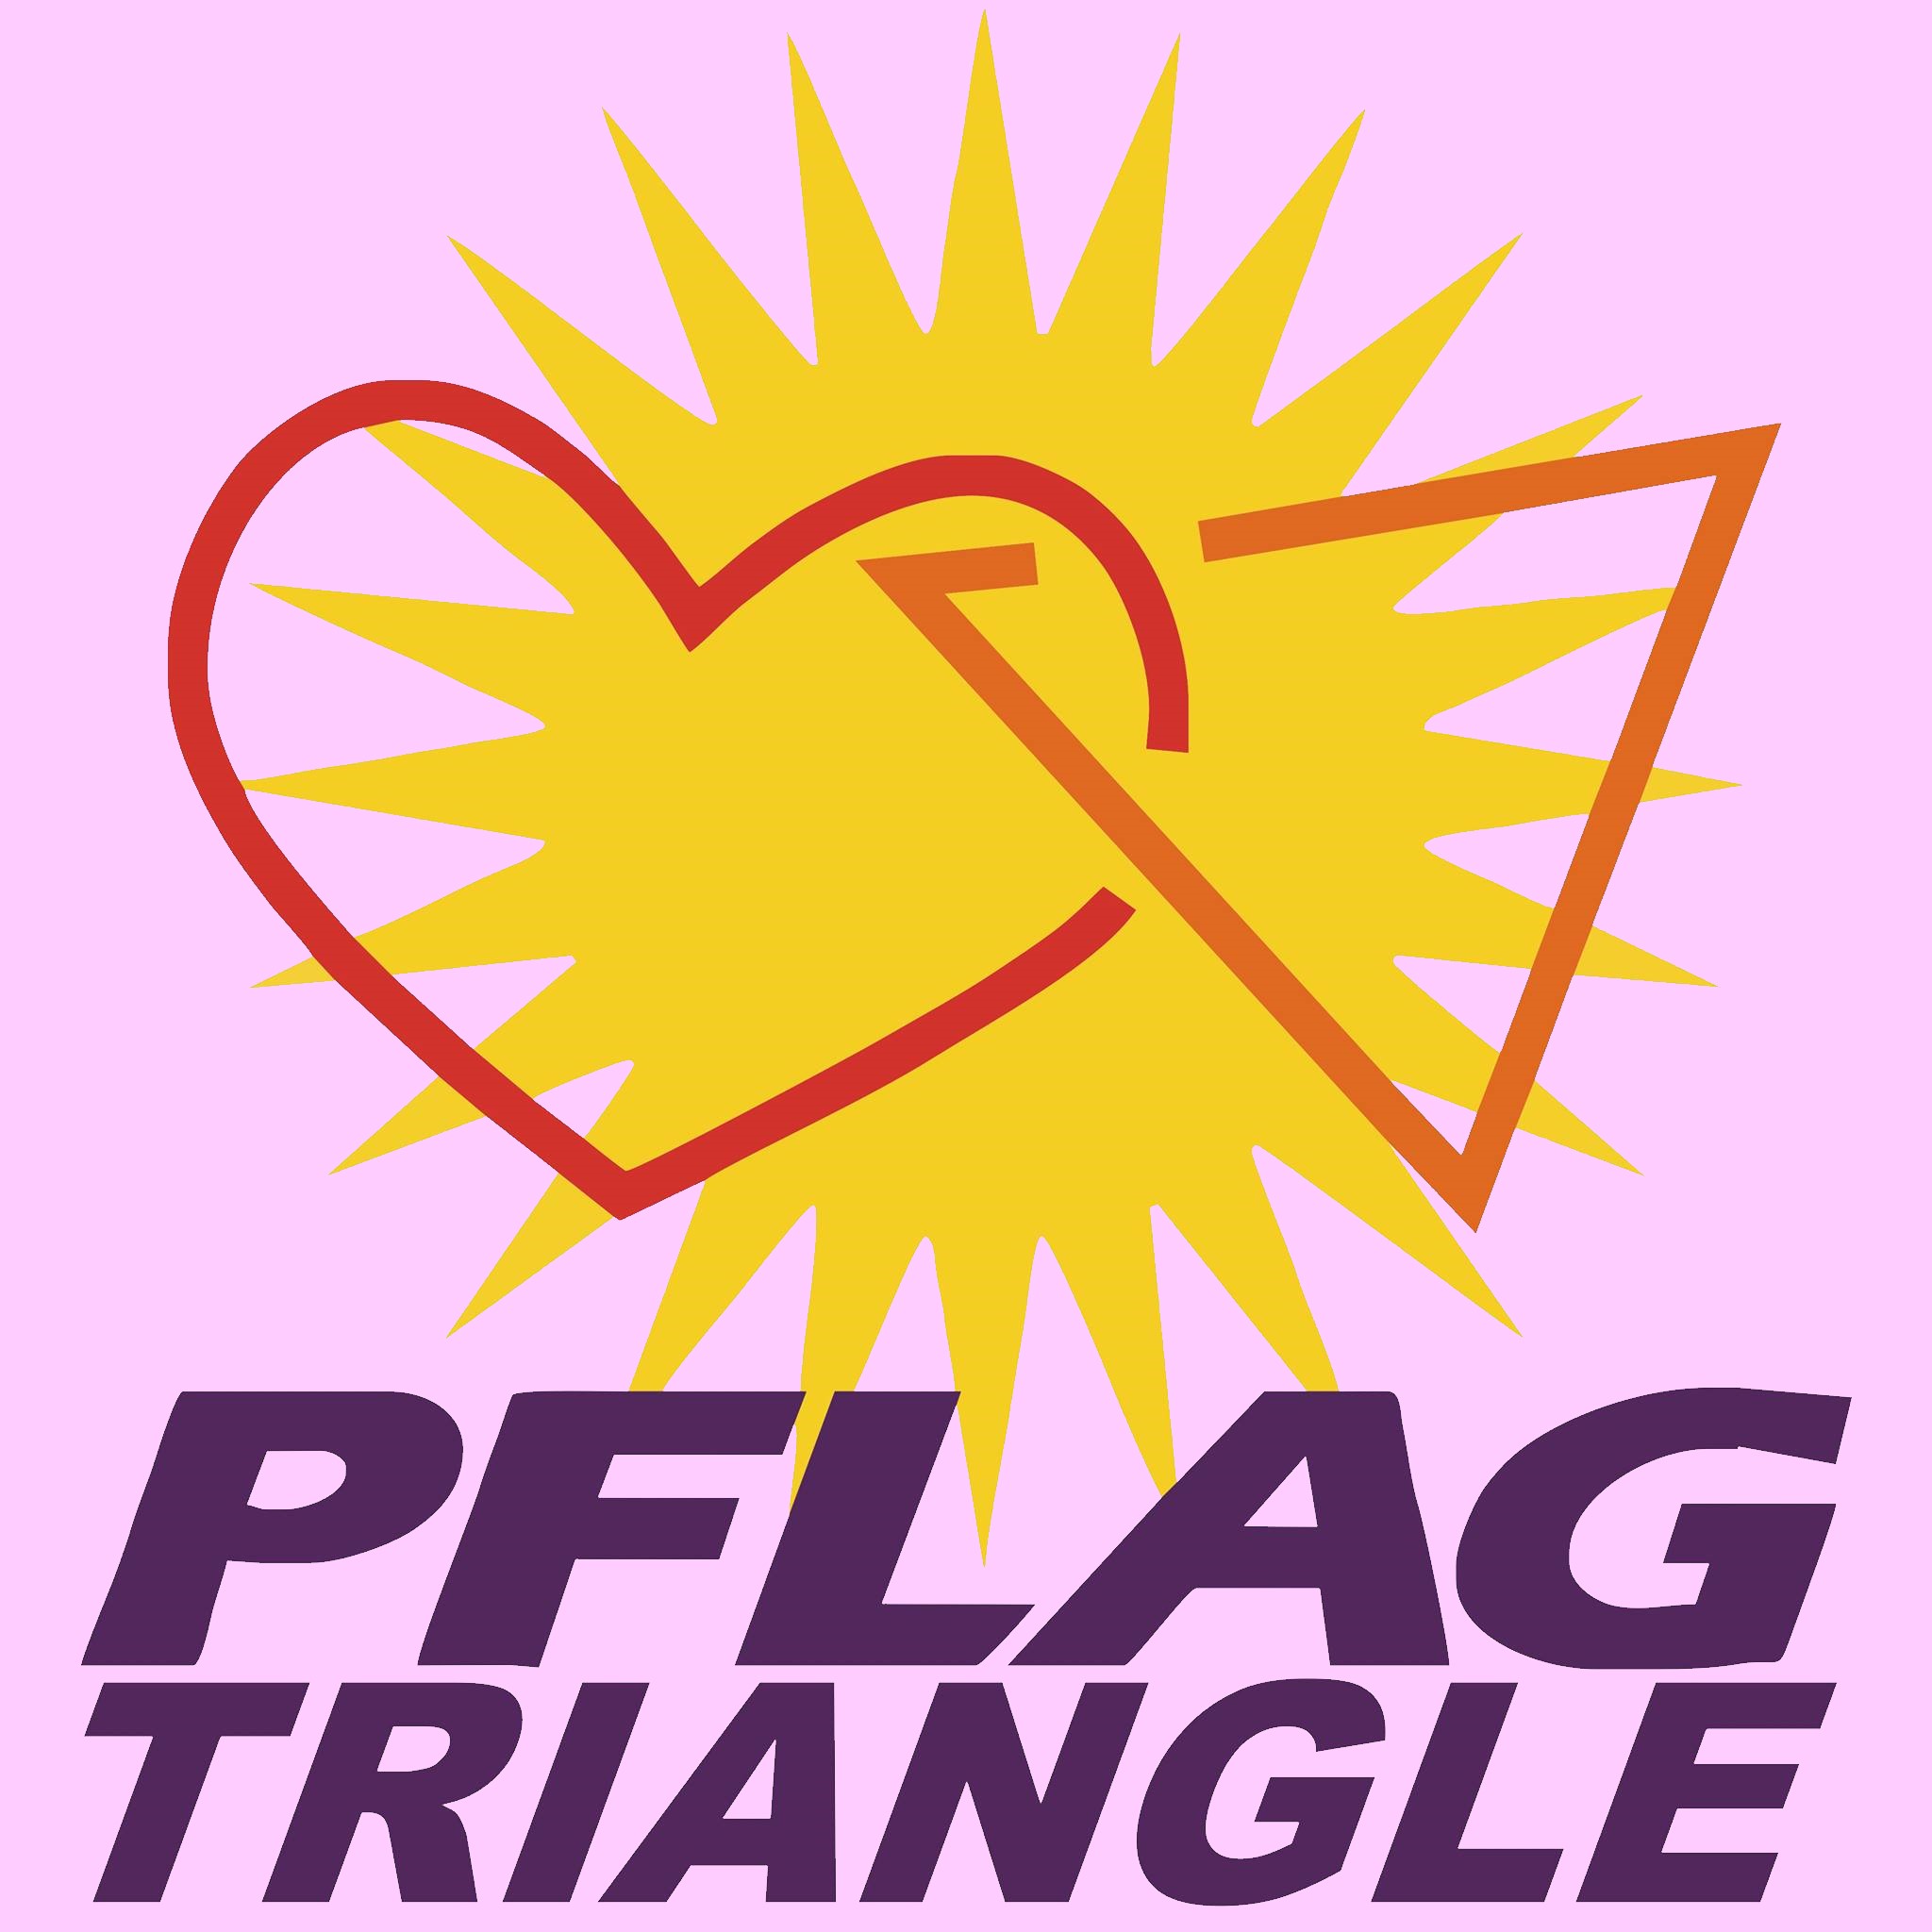 PFLAG Triangle